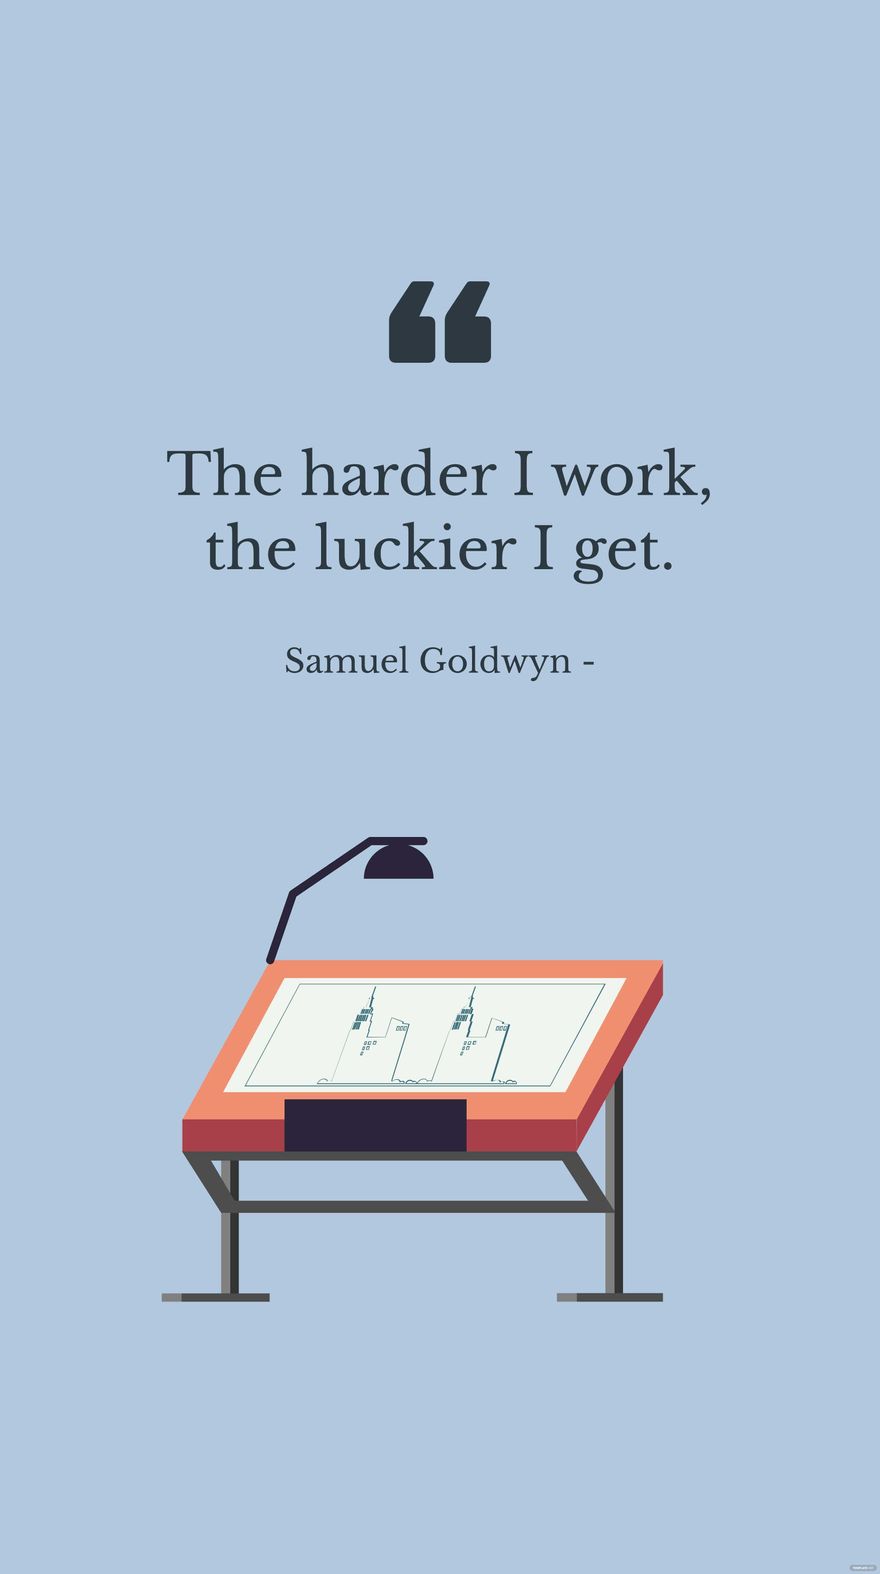 Free Samuel Goldwyn - The harder I work, the luckier I get. in JPG